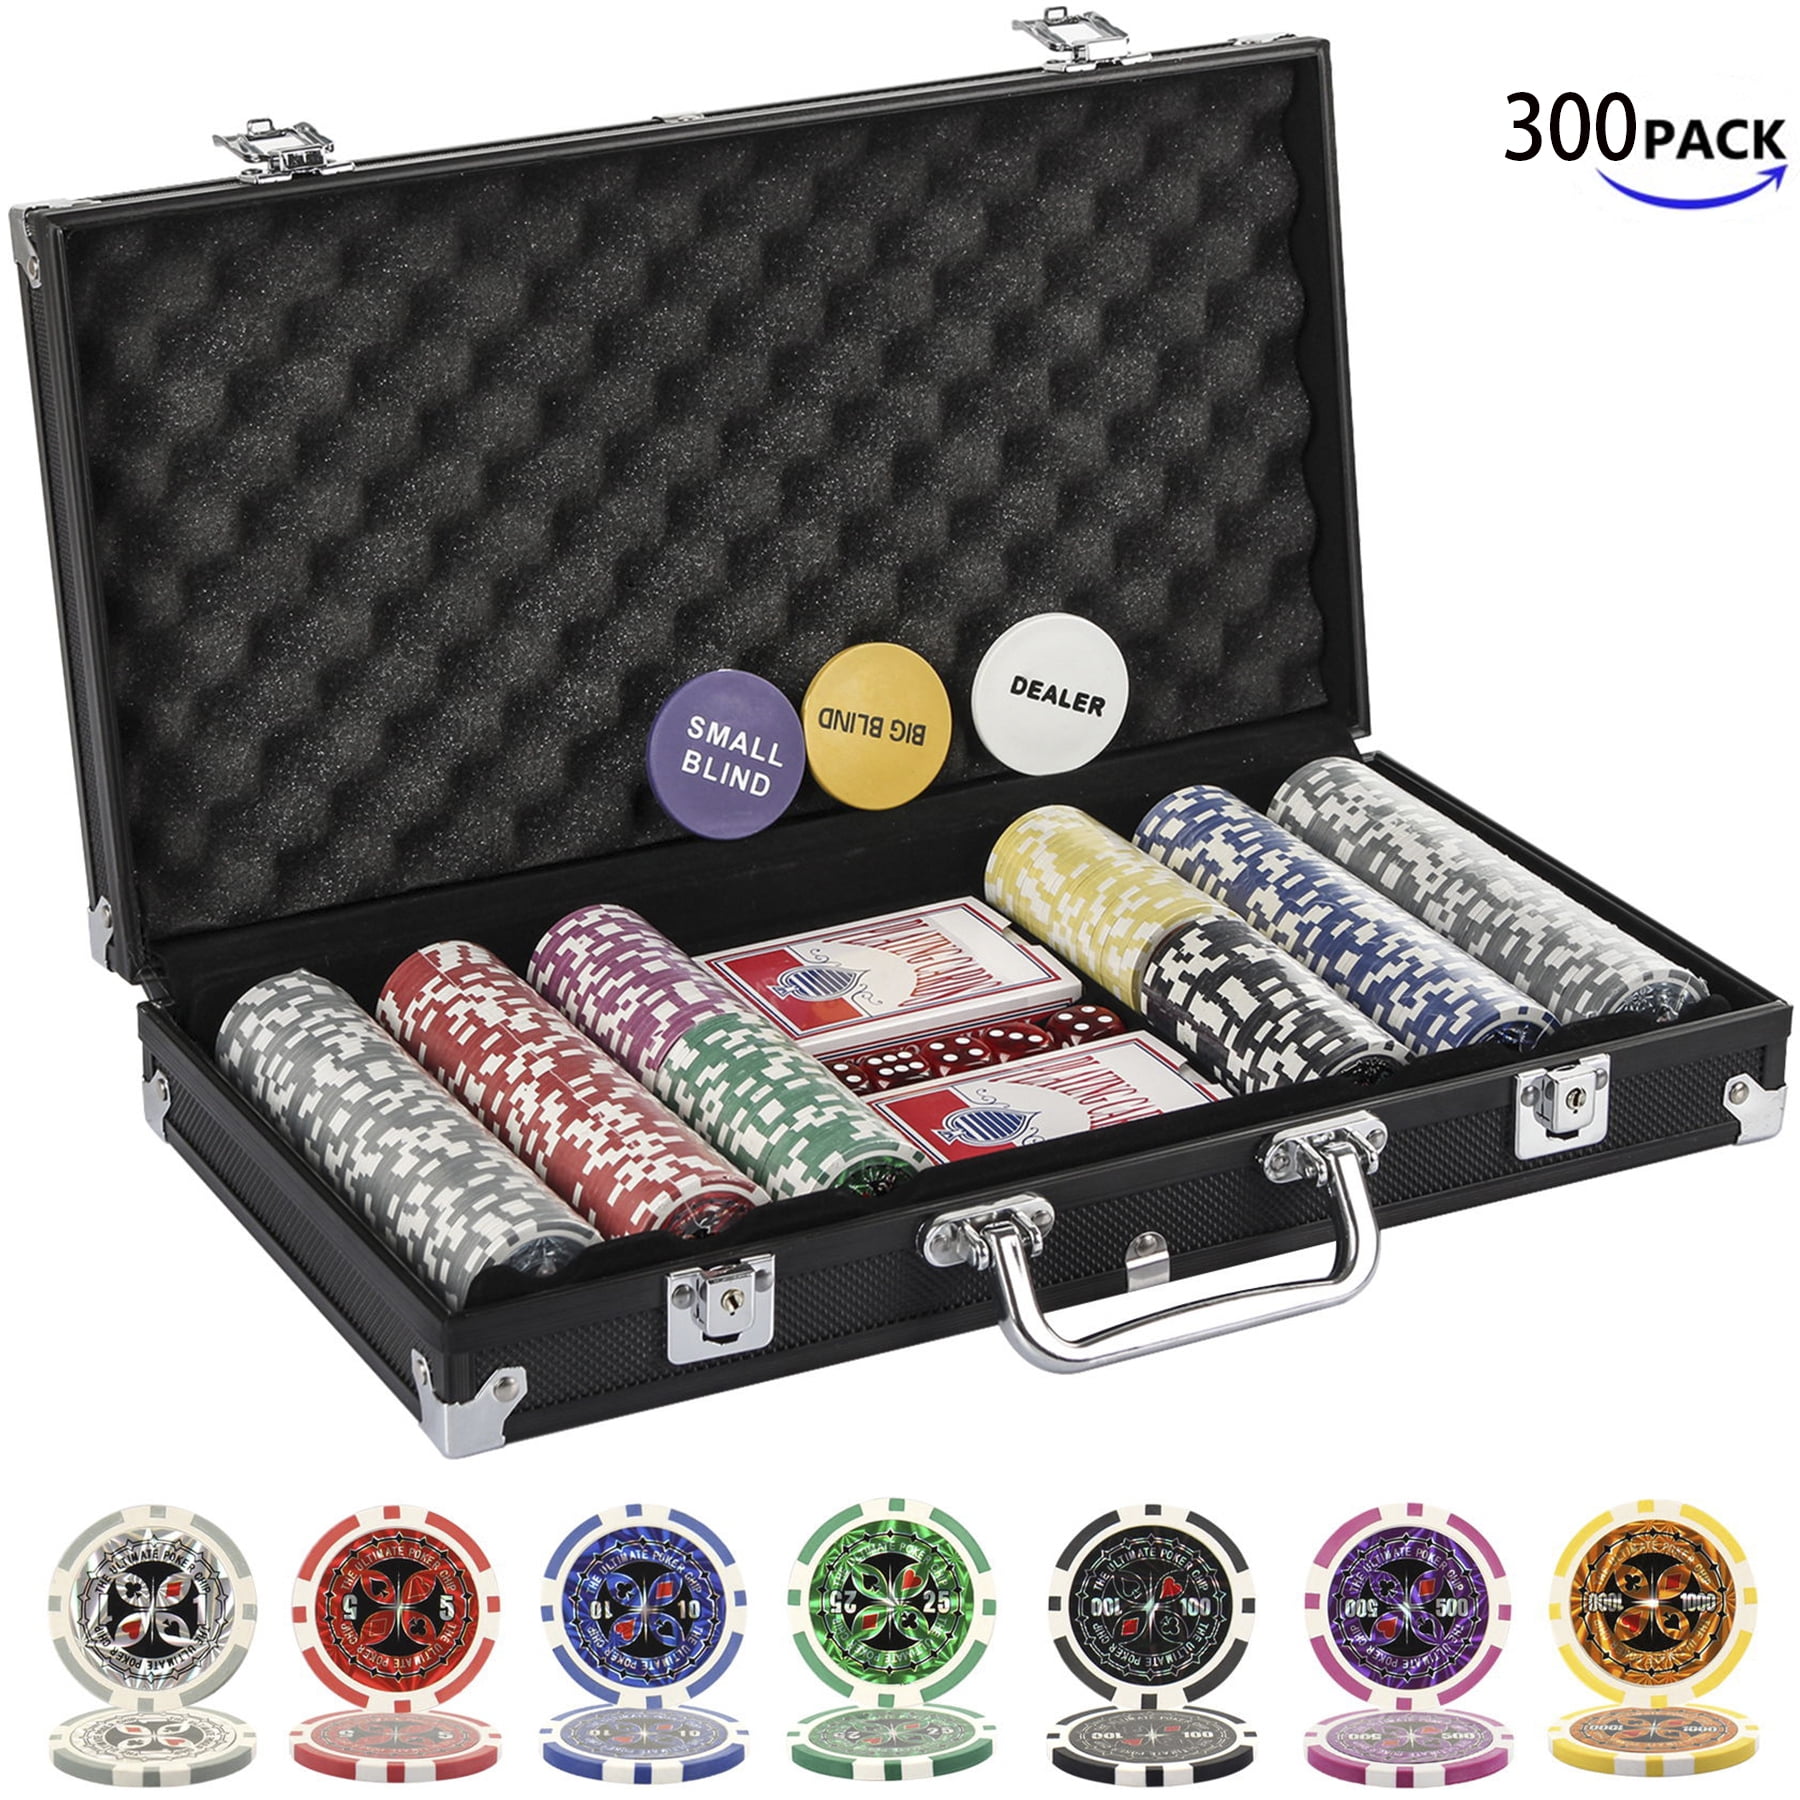 3 colors 8 gram BICYCLE poker chip samples set #182 